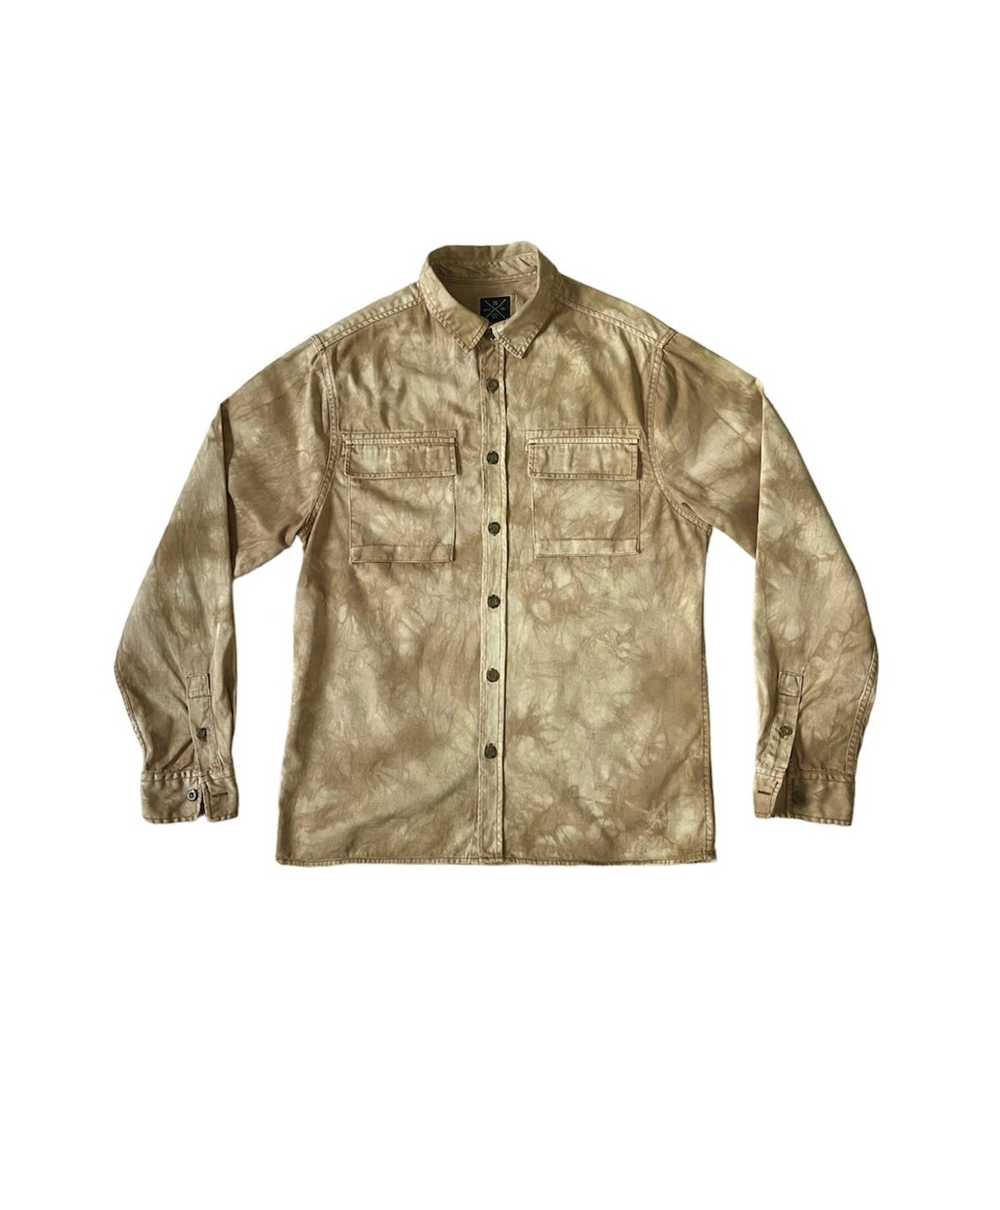 Rare × Streetwear Acid Wash Men’s Button Up Shirt - image 2